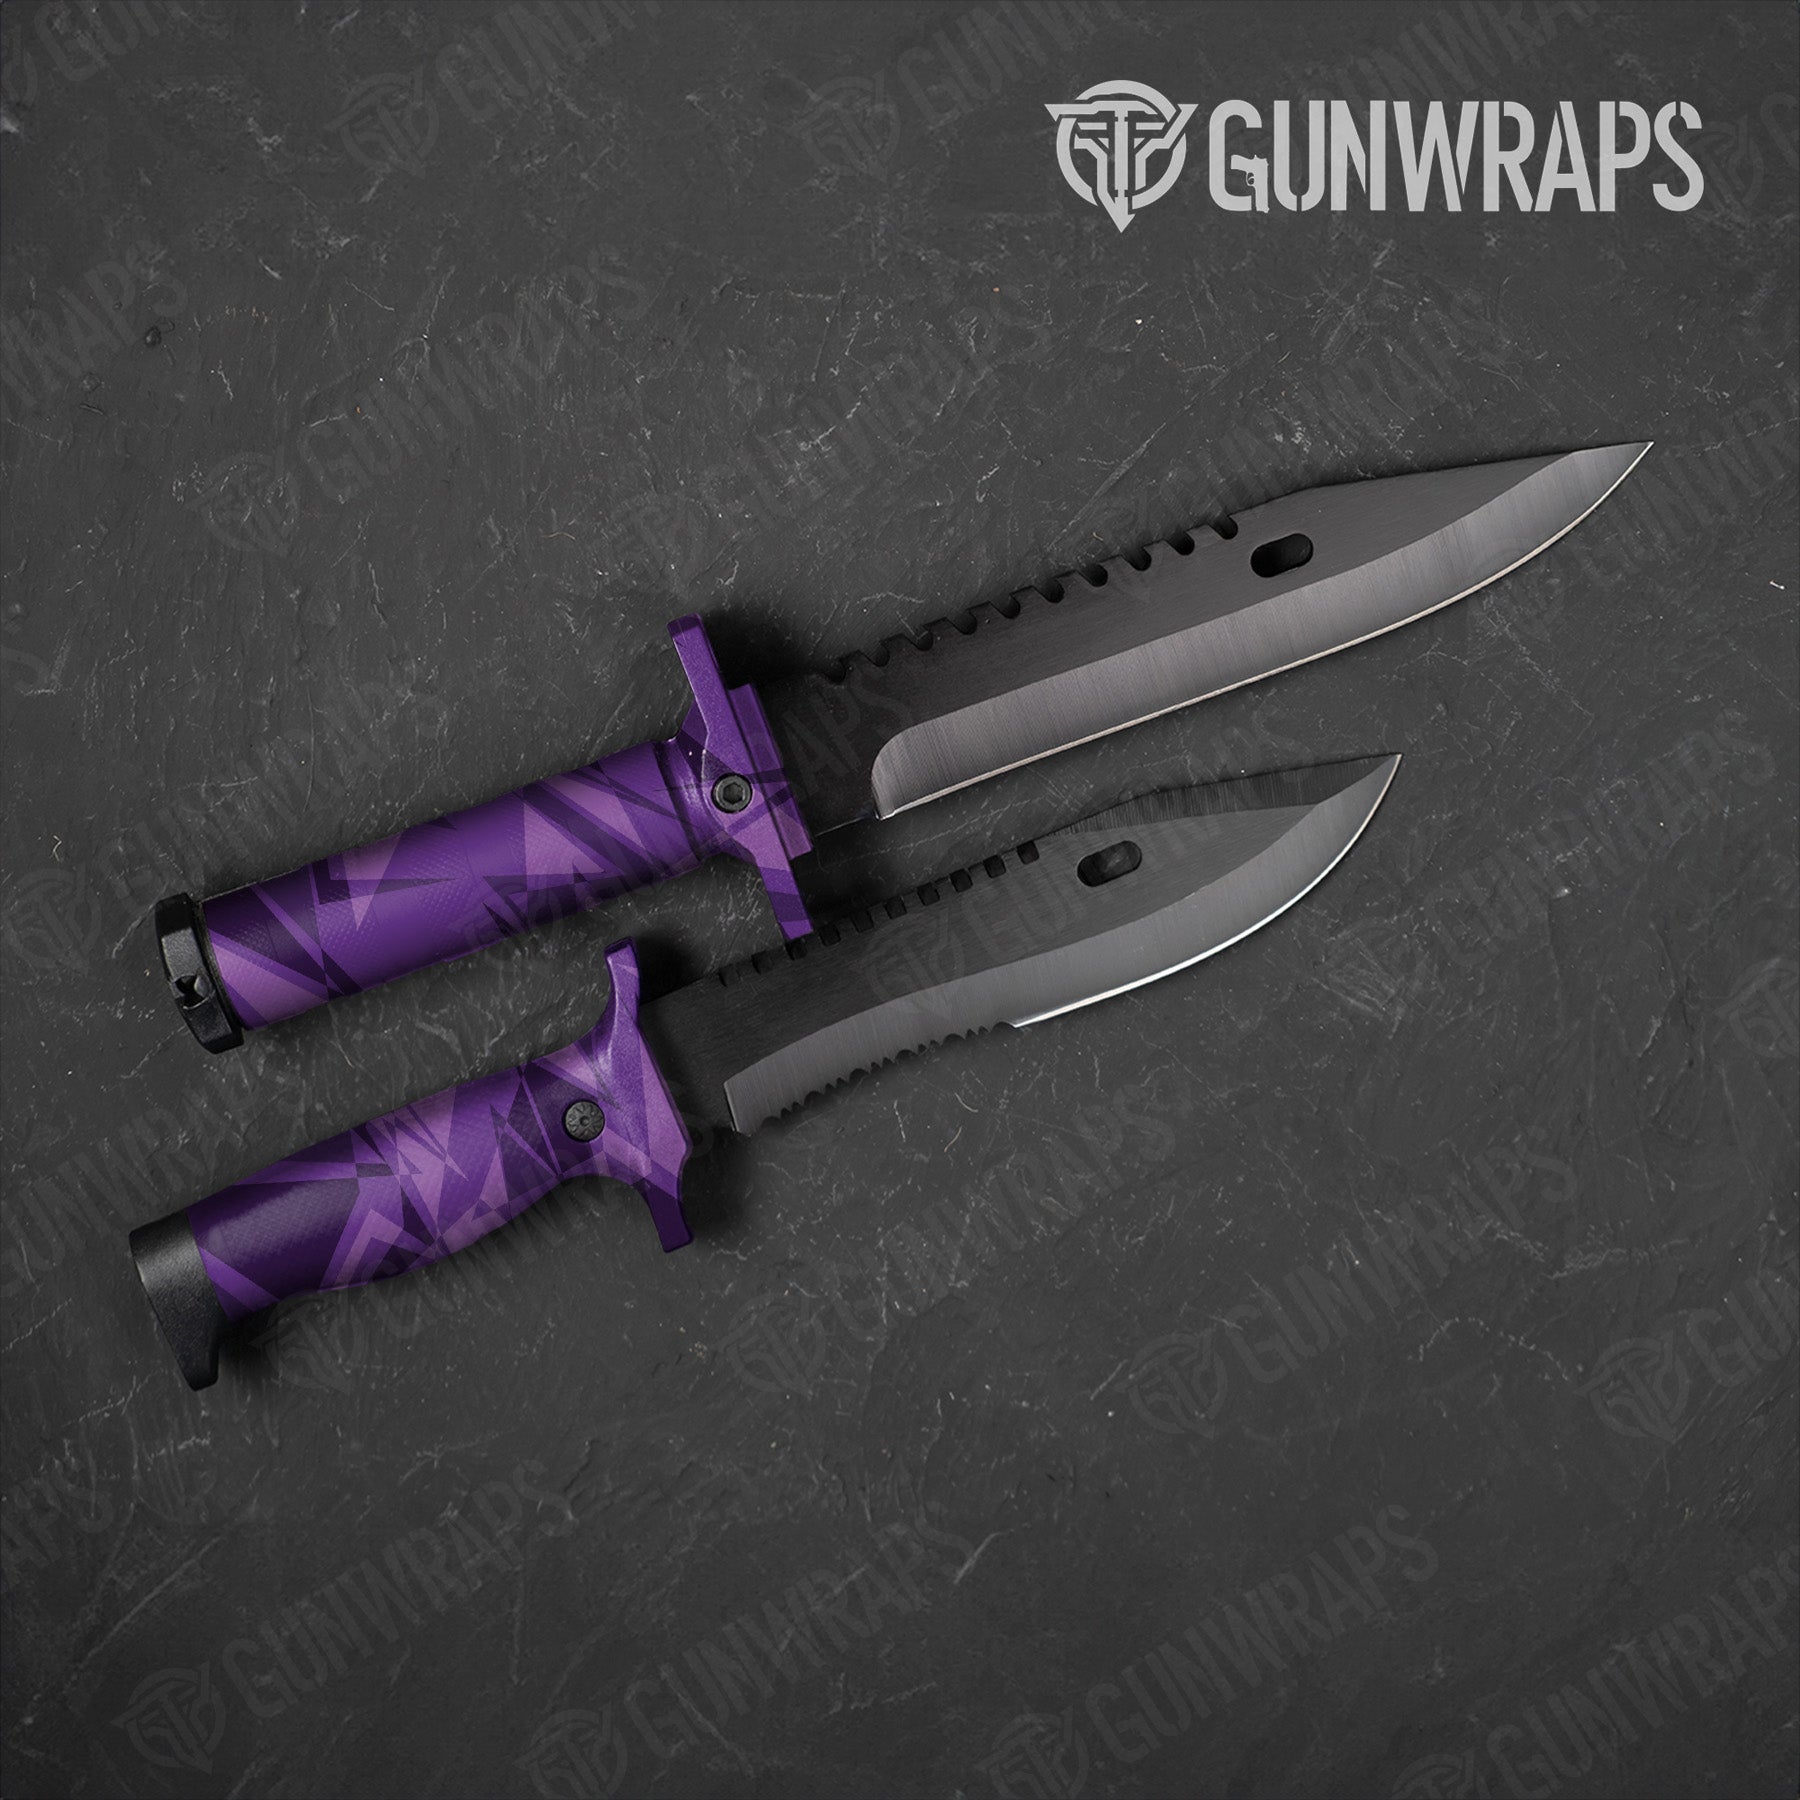 Sharp Elite Purple Camo Knife Gear Skin Vinyl Wrap